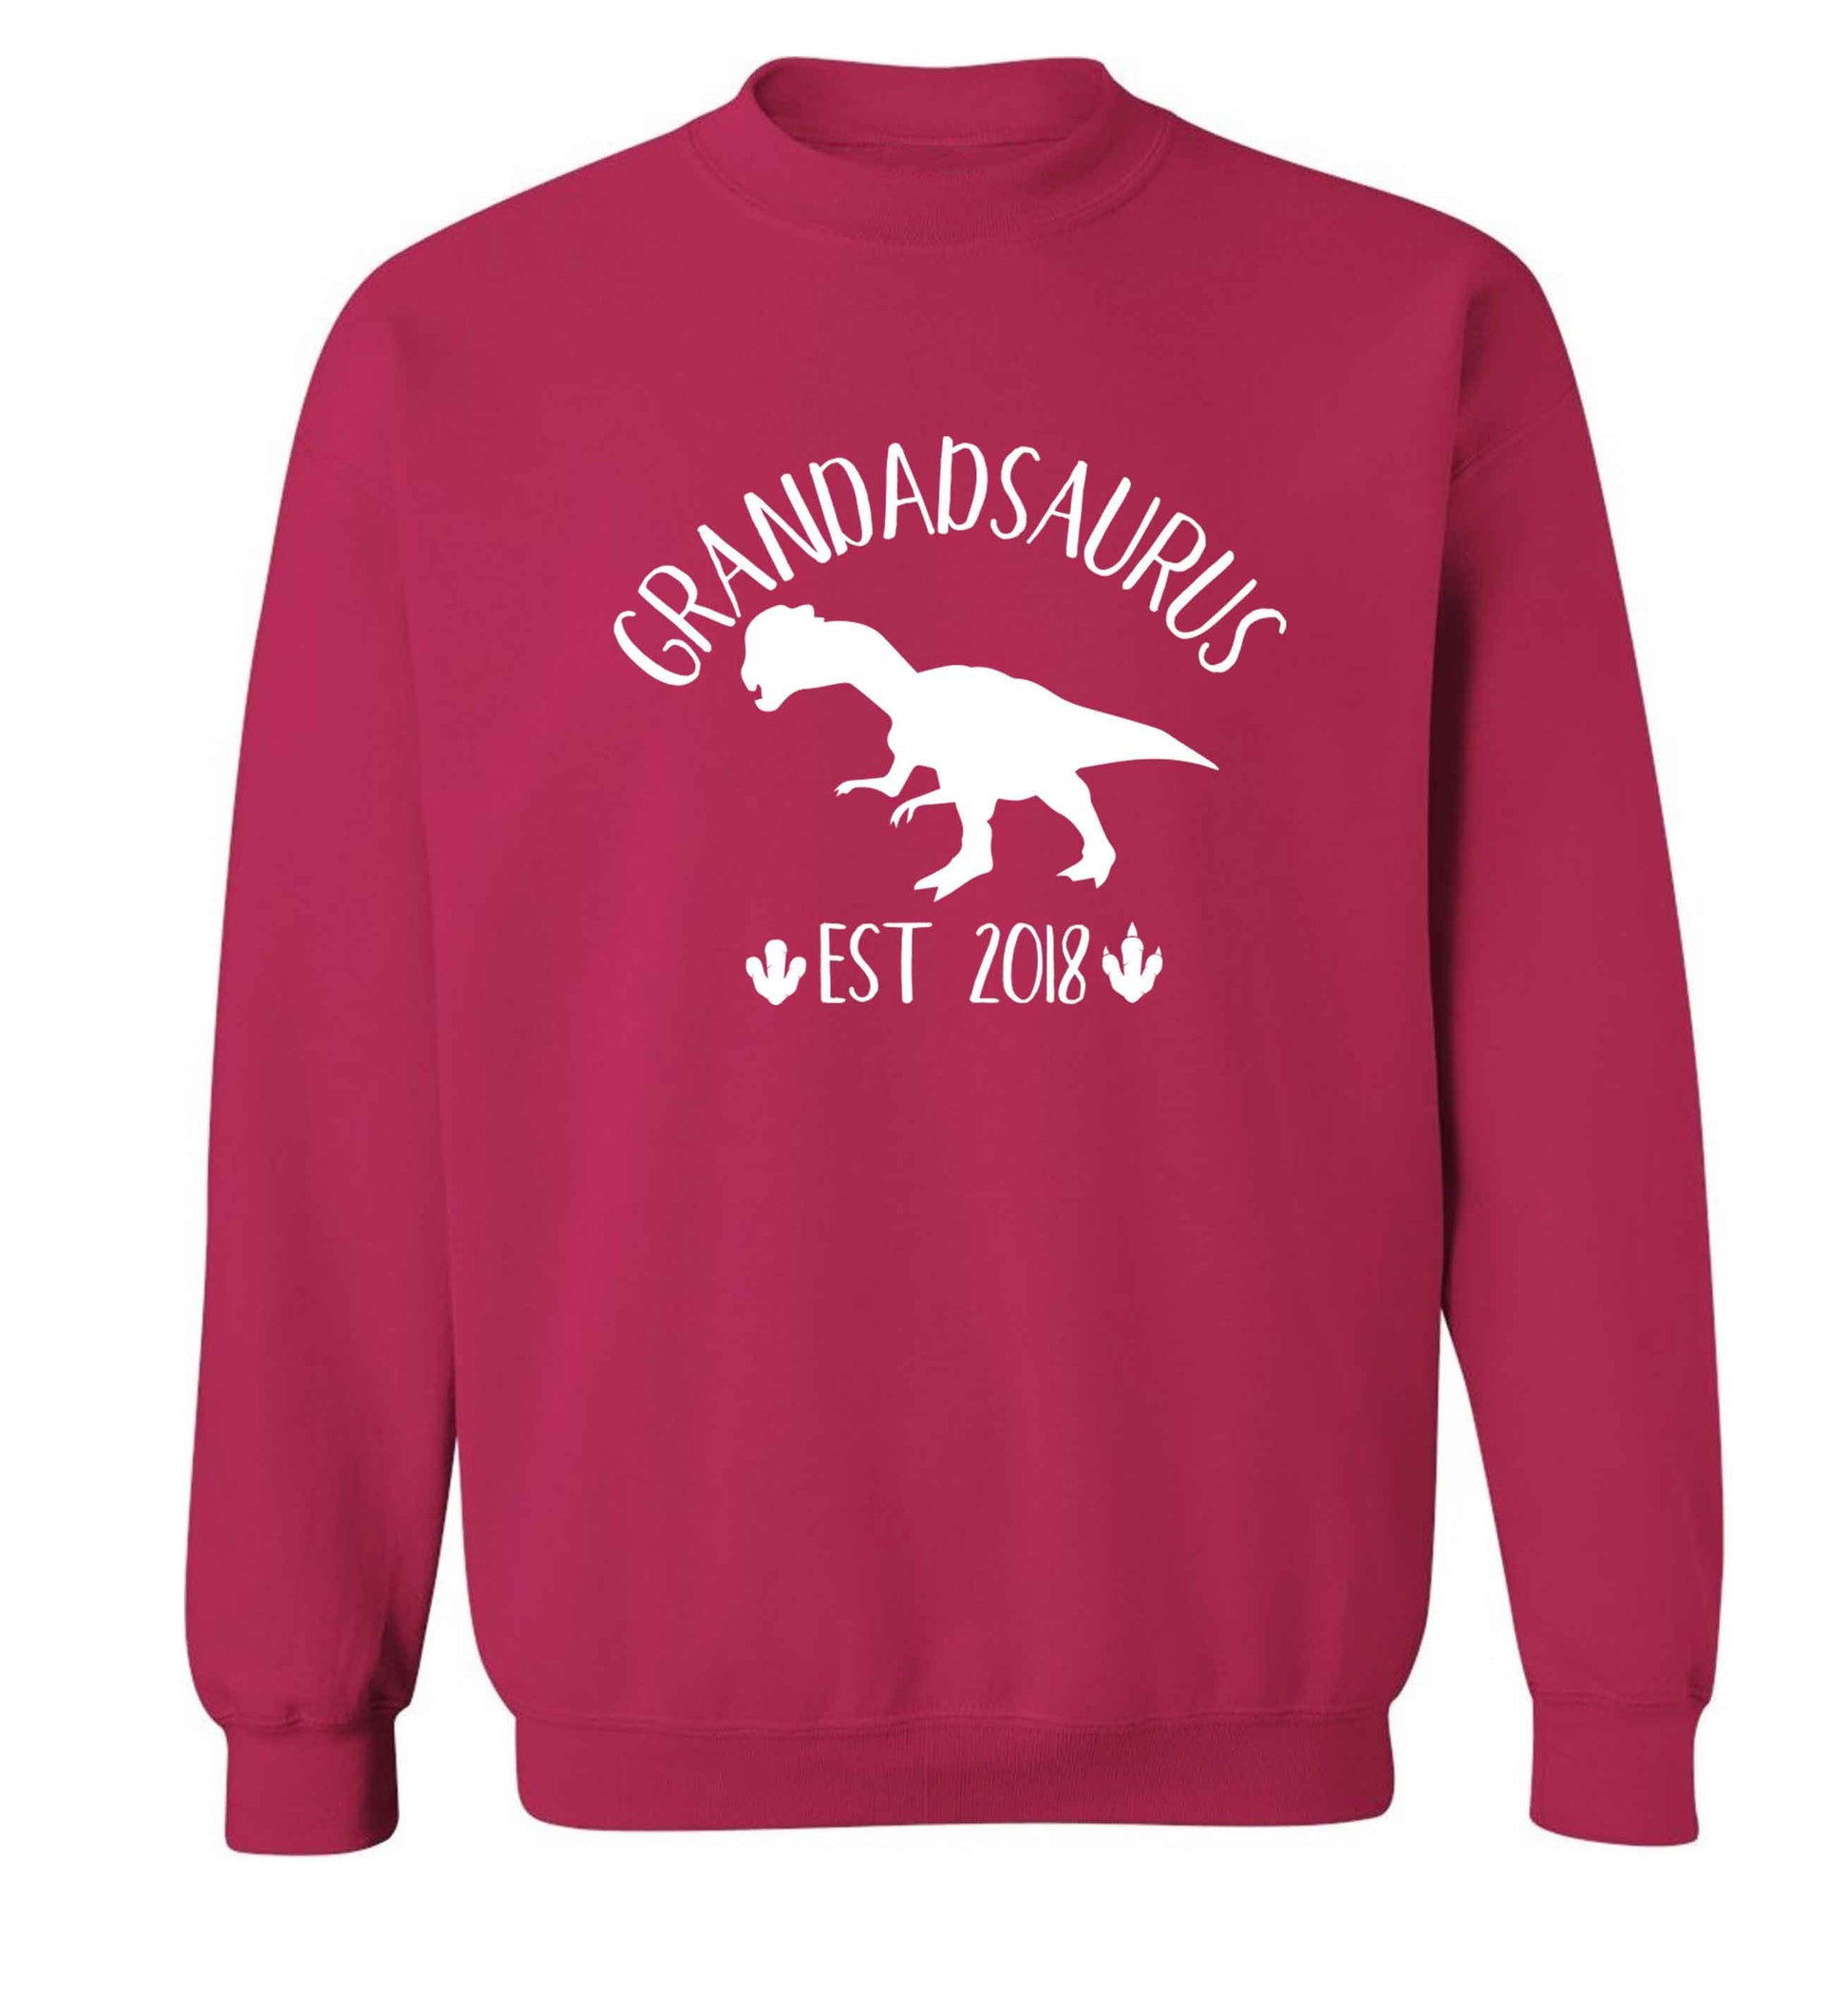 Personalised grandadsaurus since (custom date) Adult's unisex pink Sweater 2XL